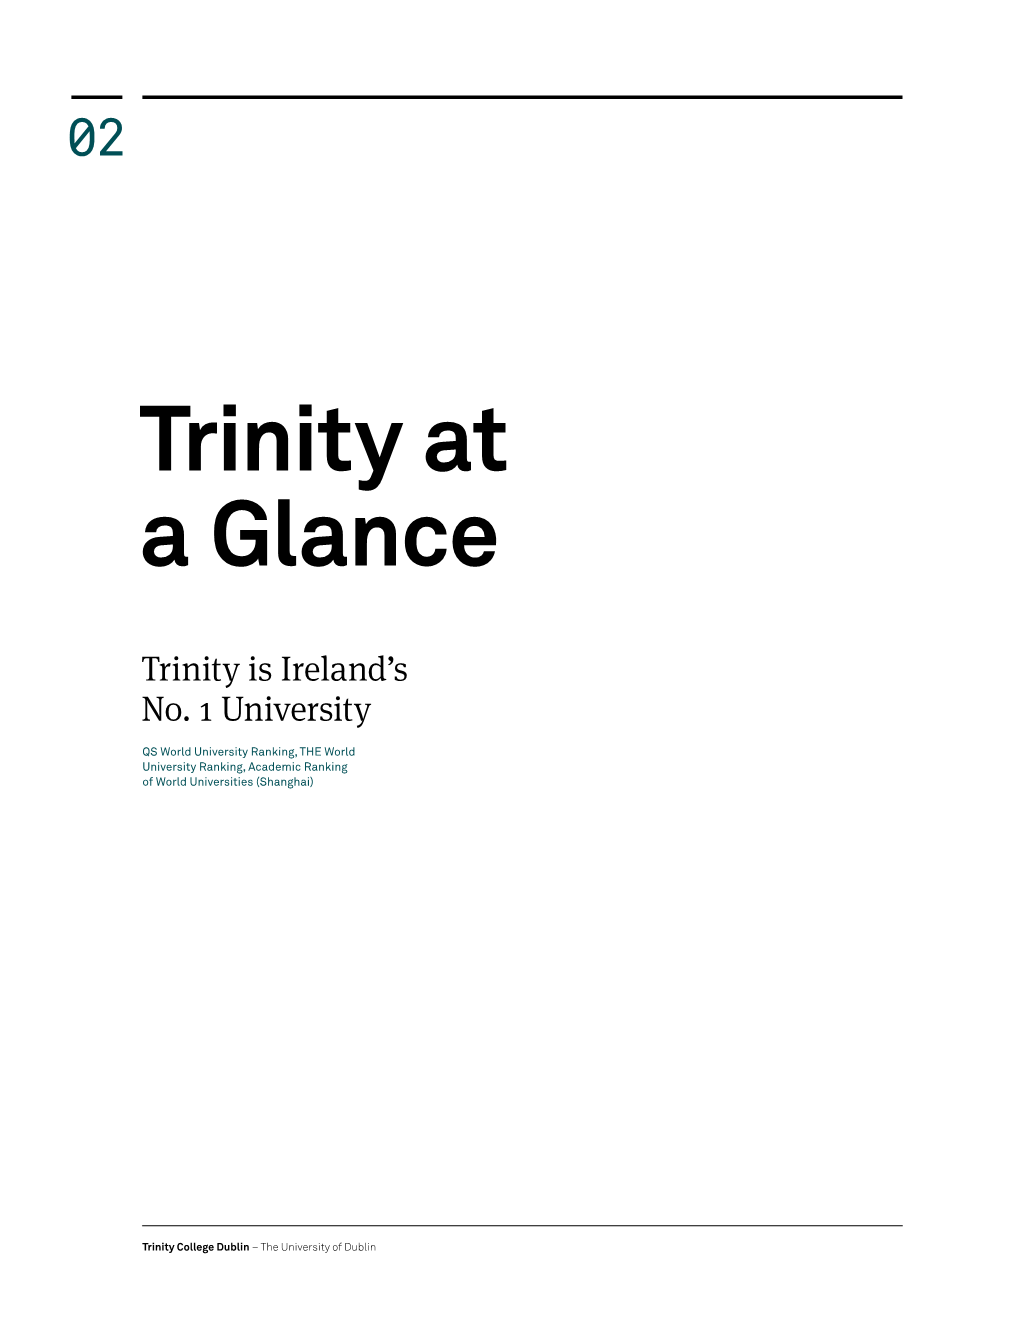 Trinity at a Glance